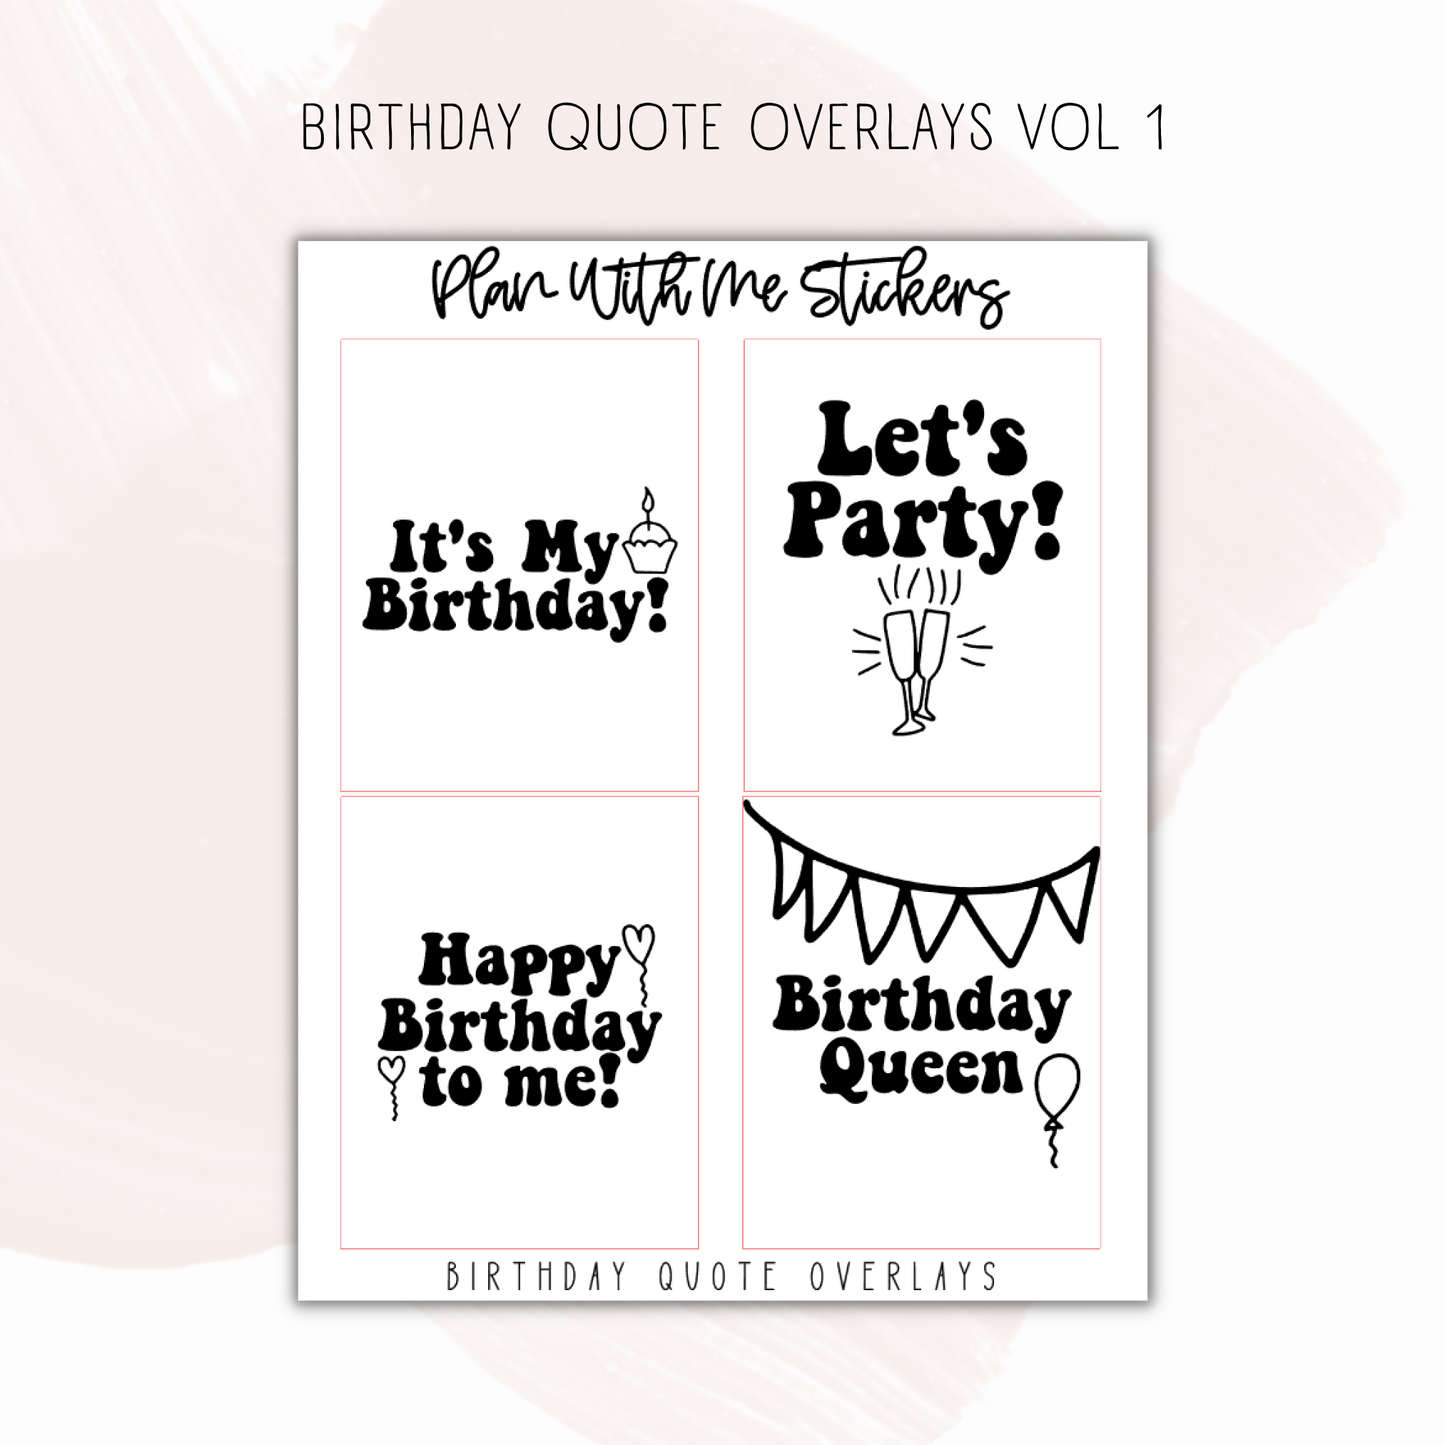 Birthday Overlays Vol 1